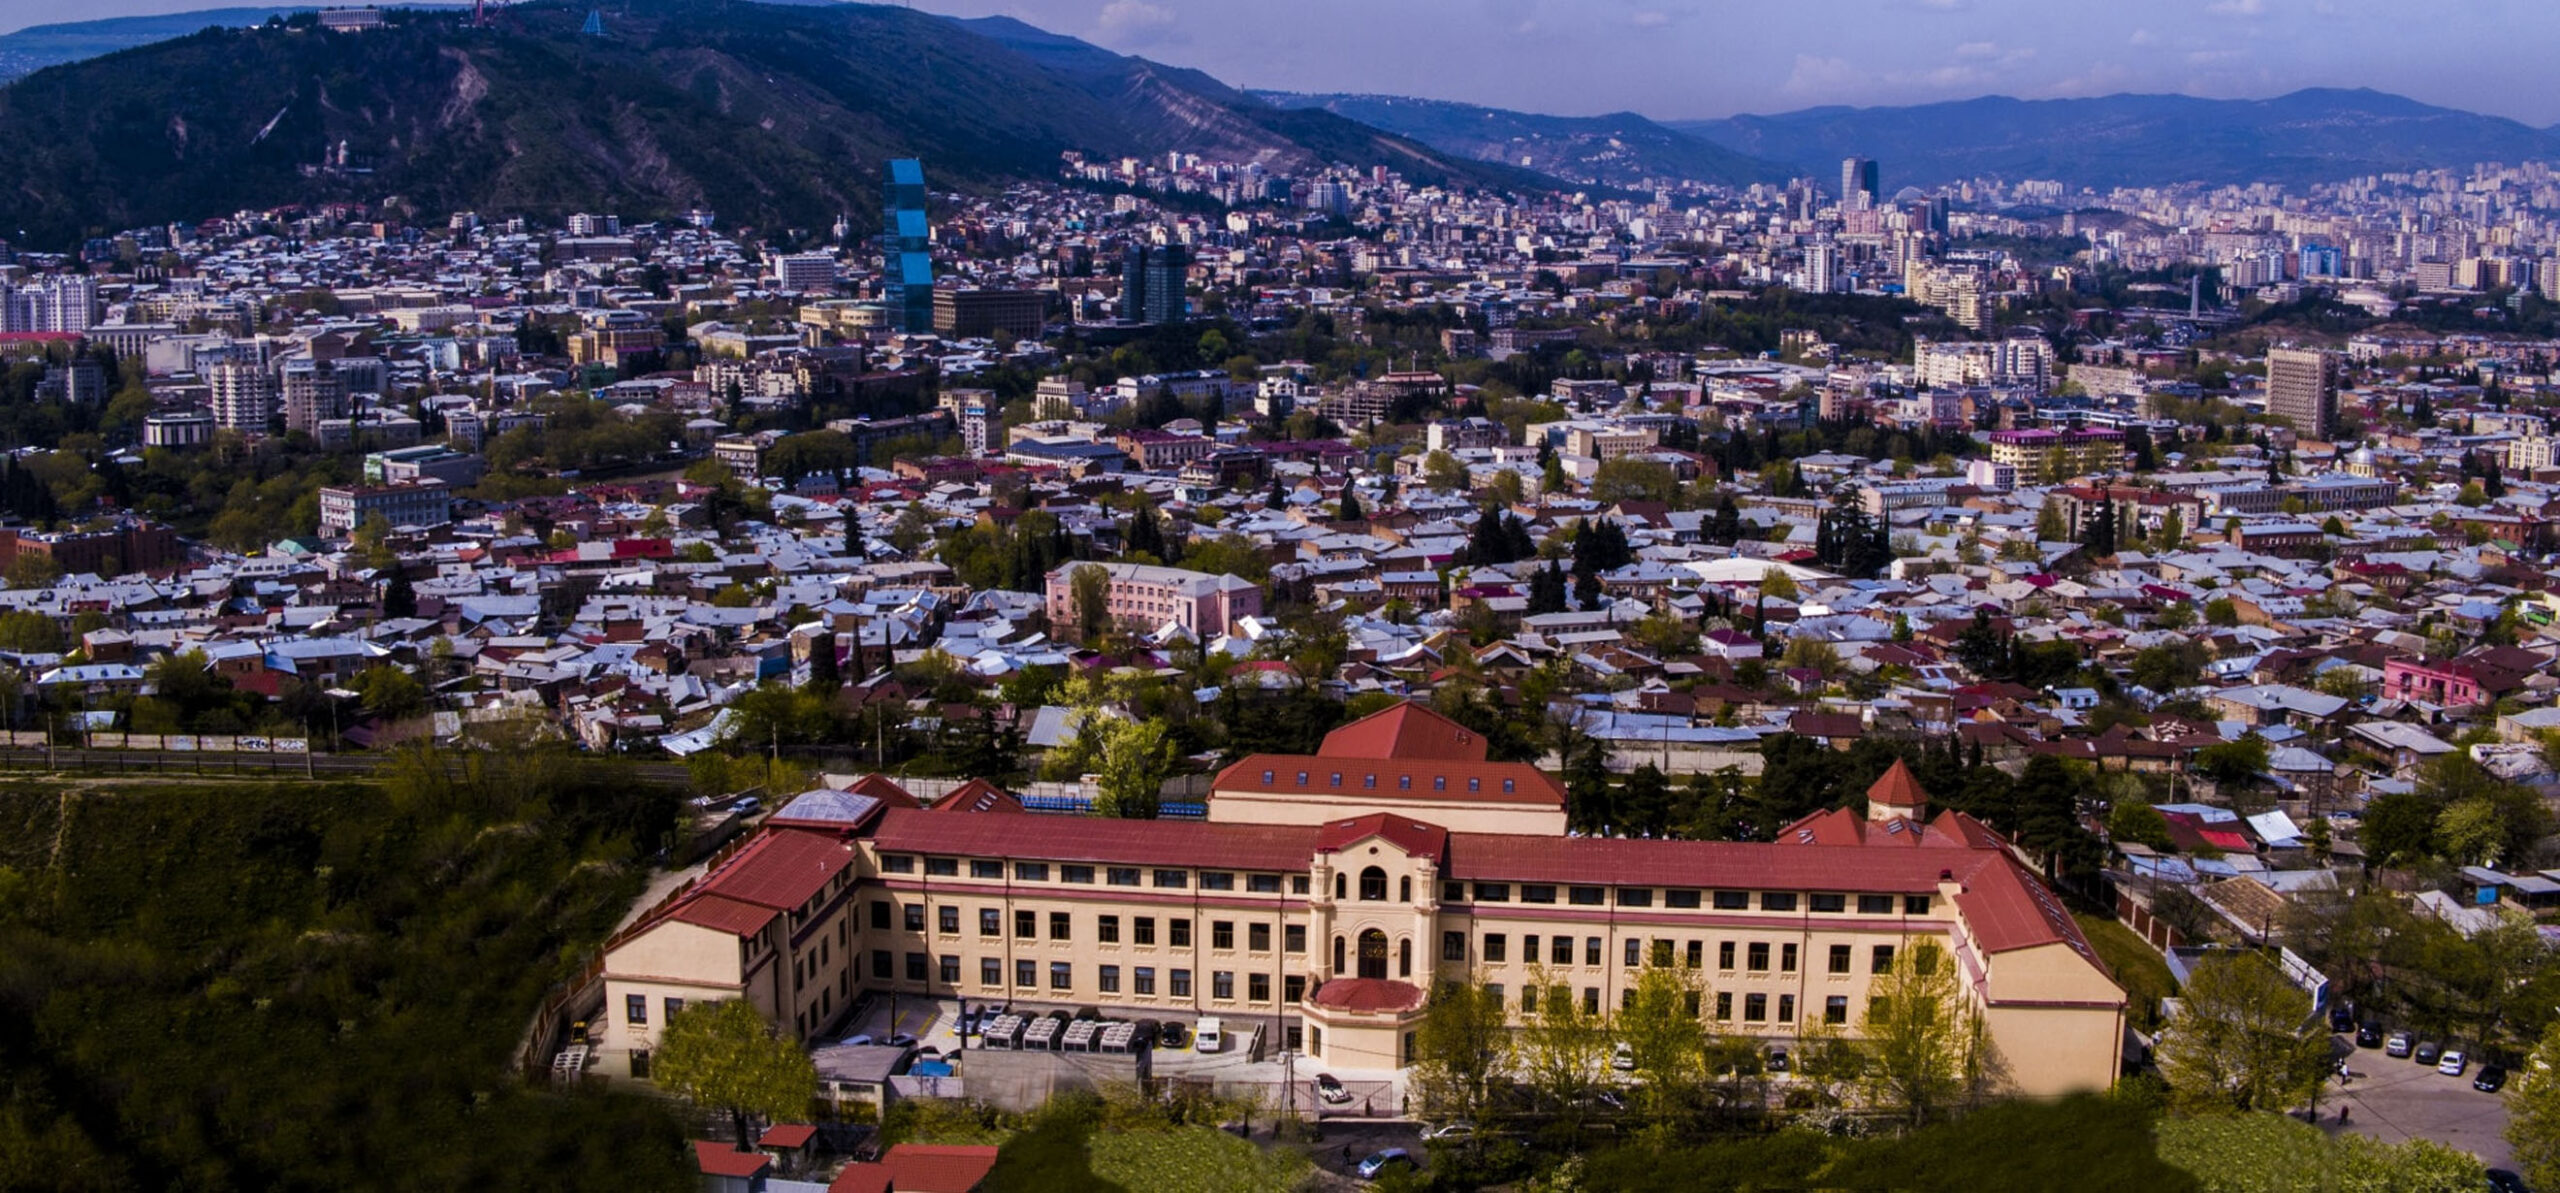 Caucasus International University